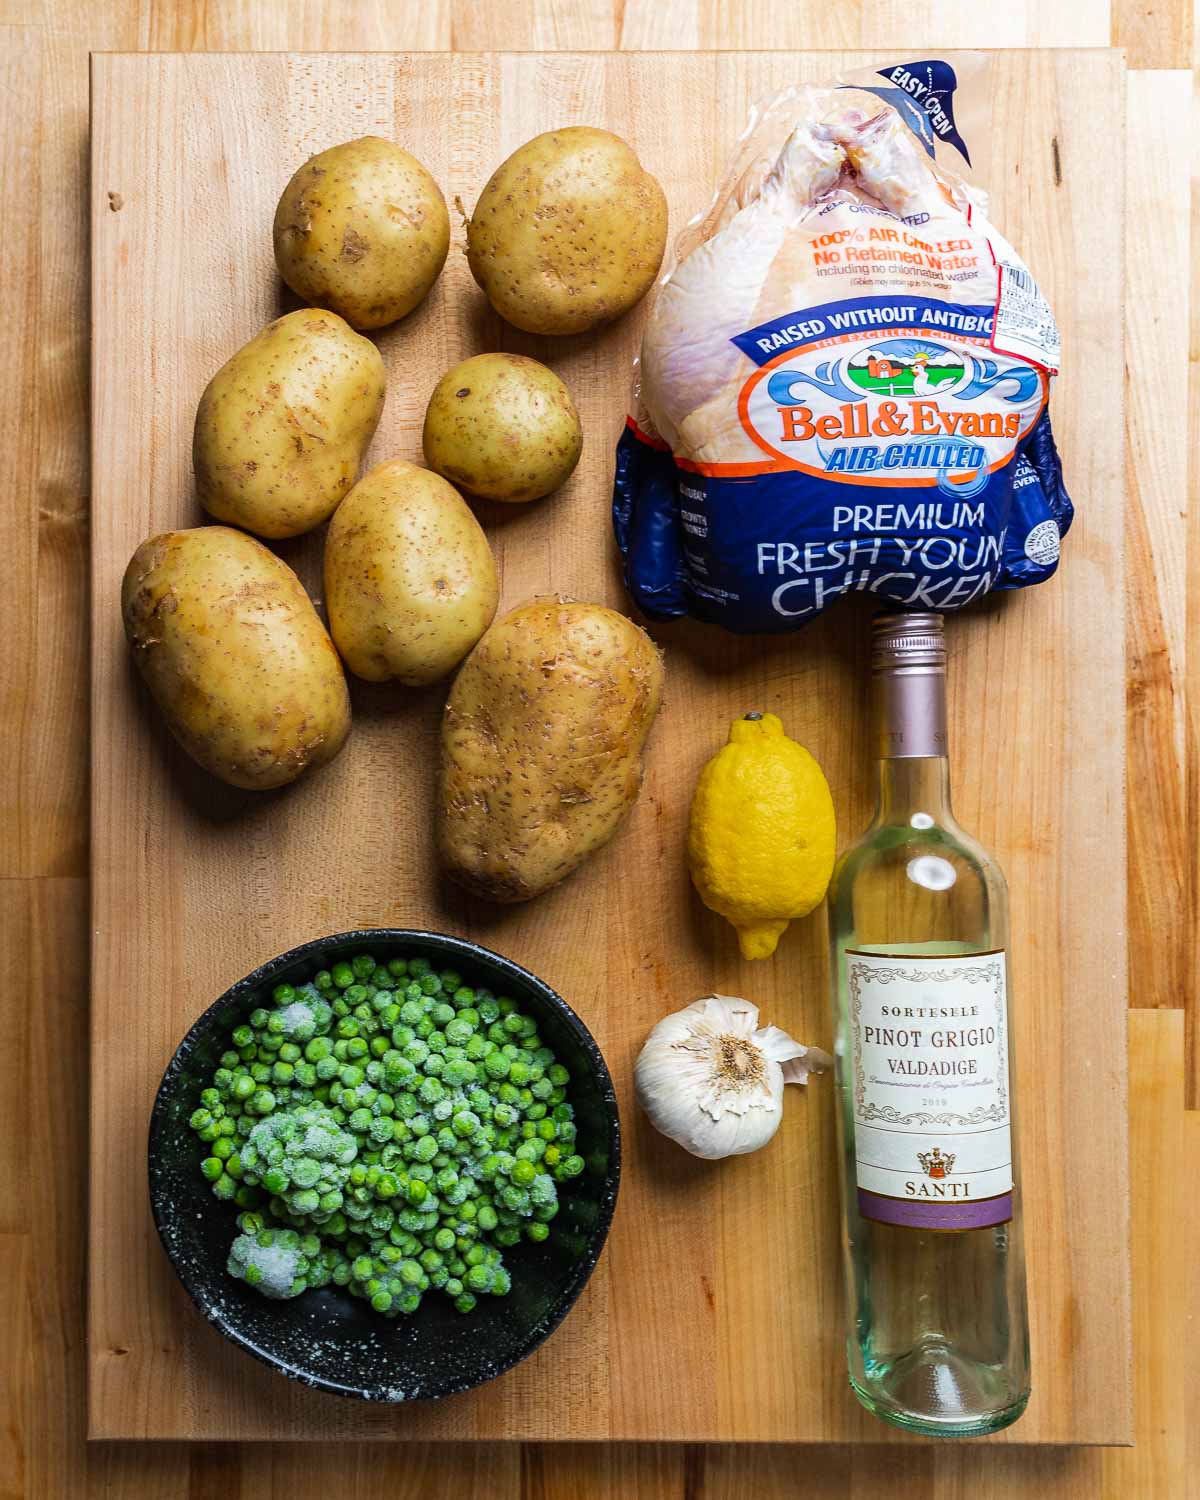 Ingredients shown: potatoes, whole chicken, peas, lemon, garlic, and white wine.